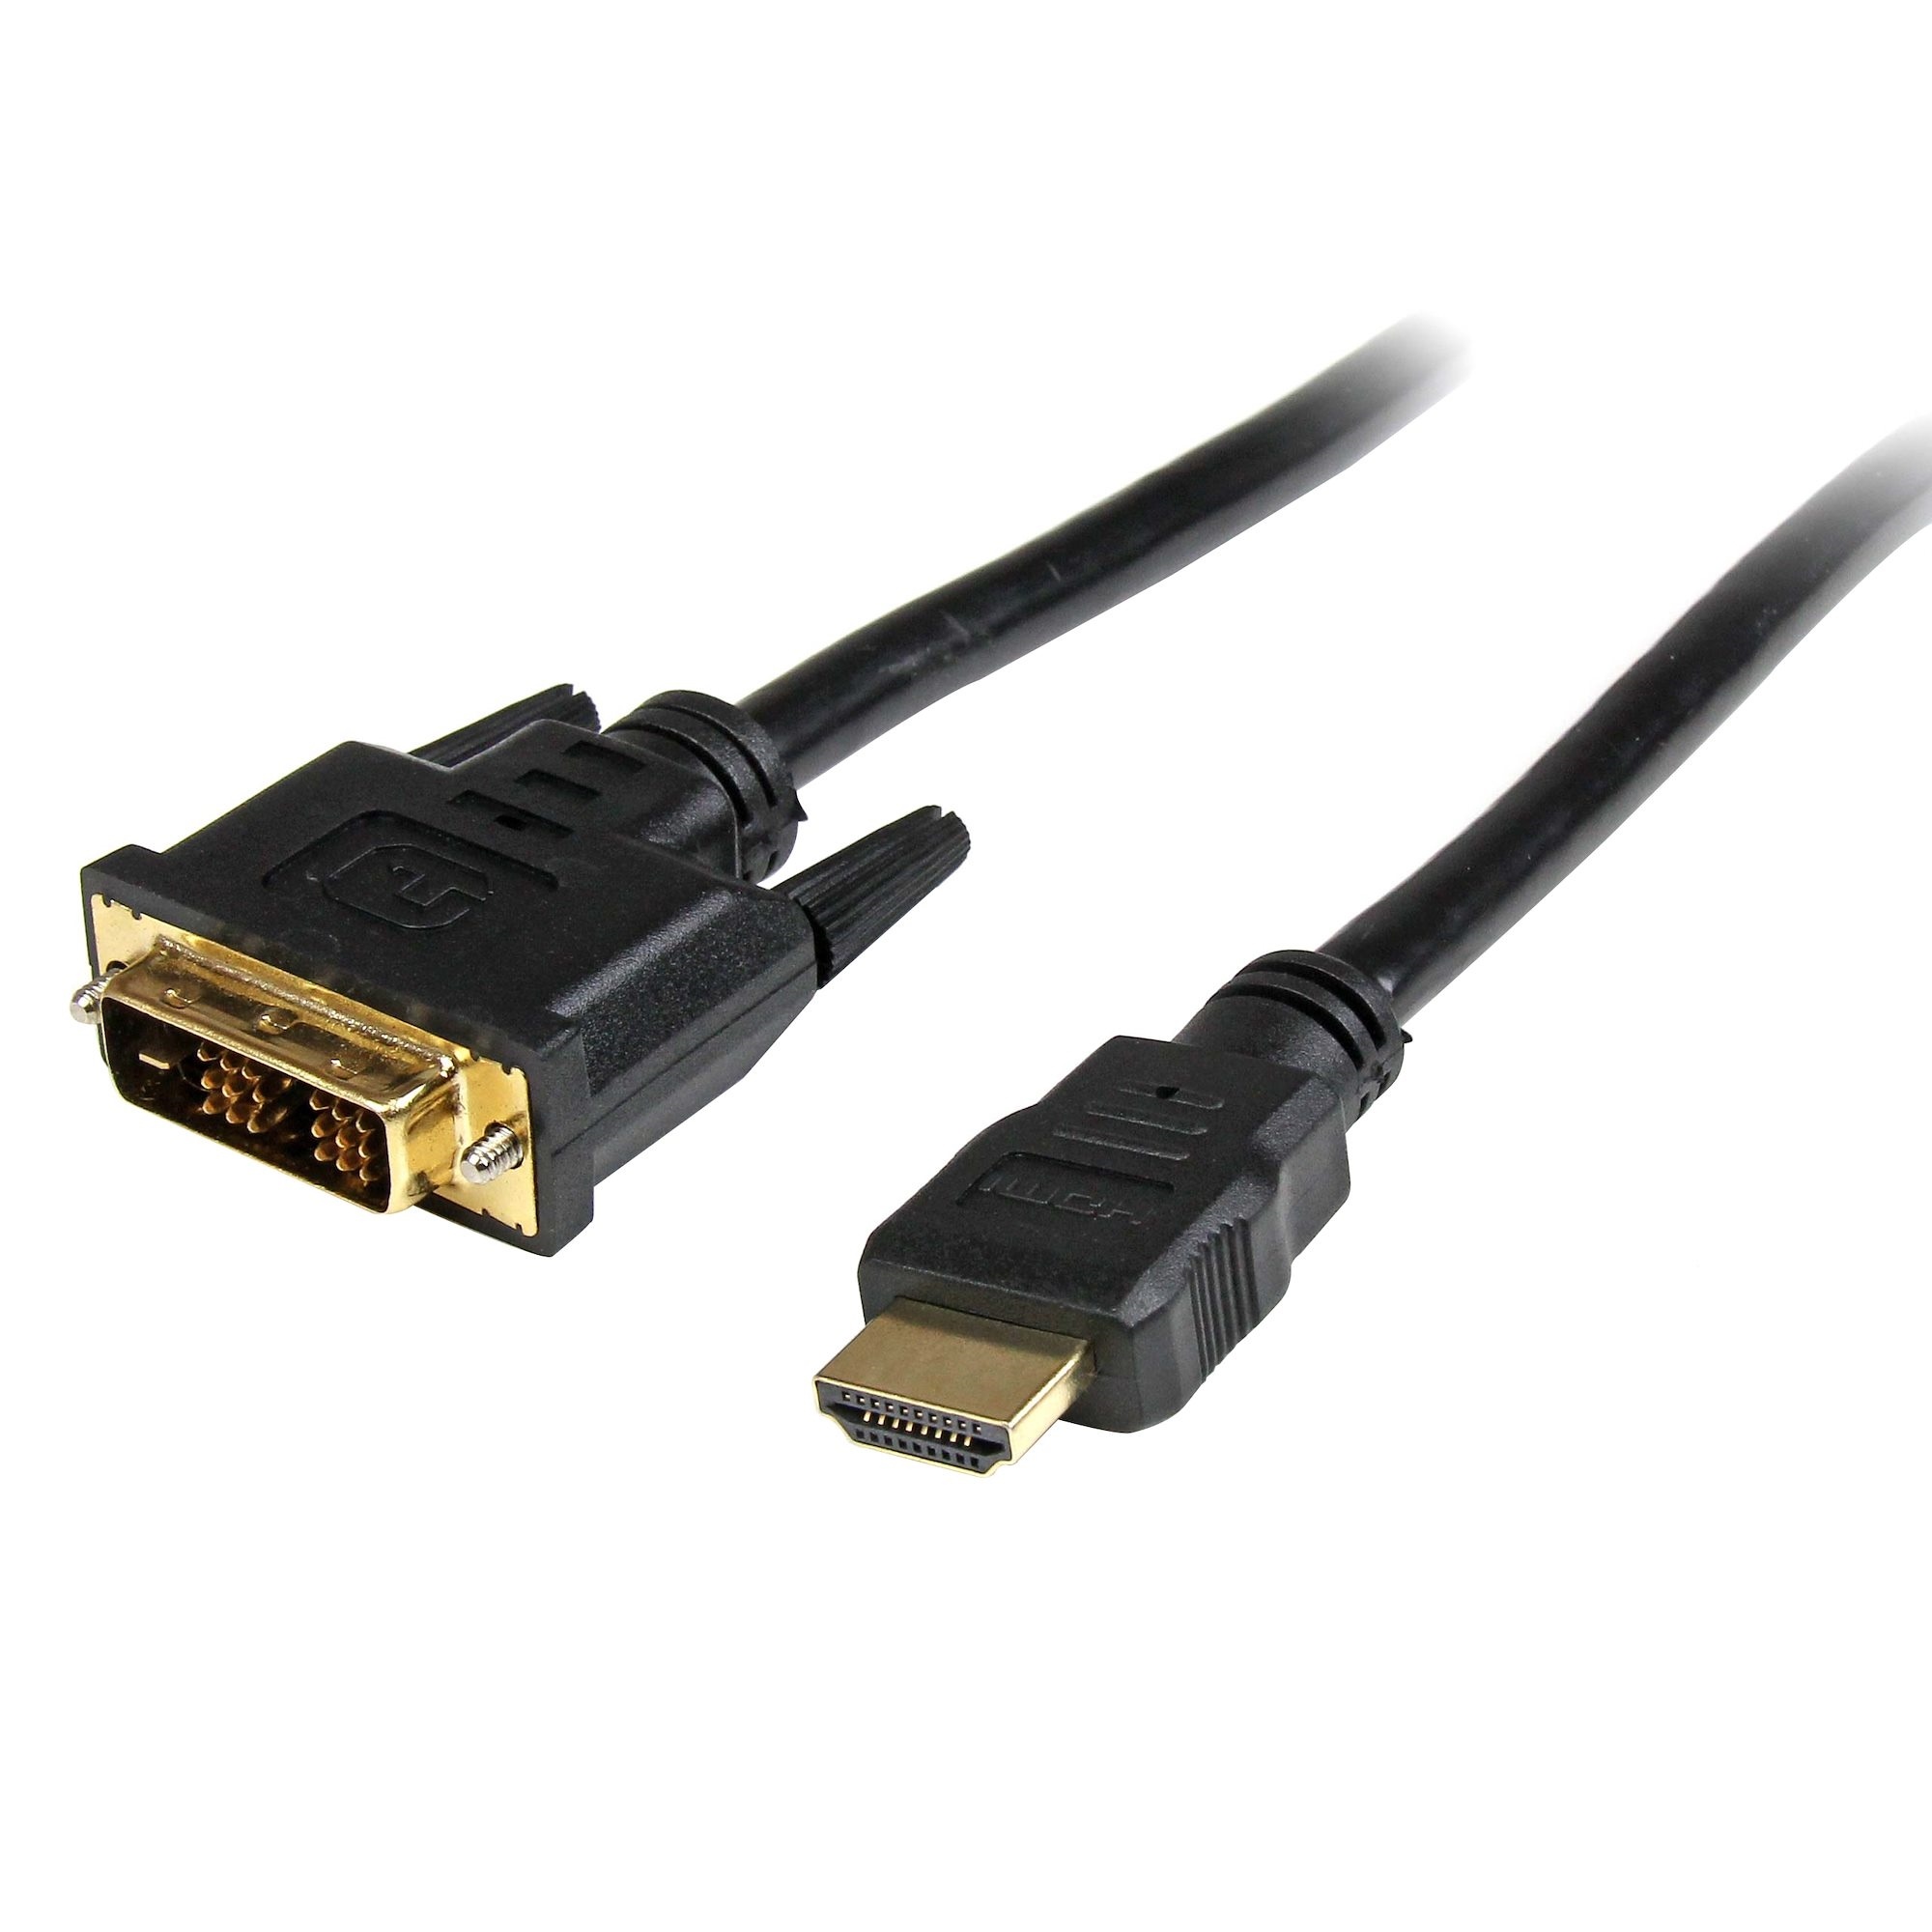 StarTech HDMI to DVI-D Cable - M/M (0.5m)